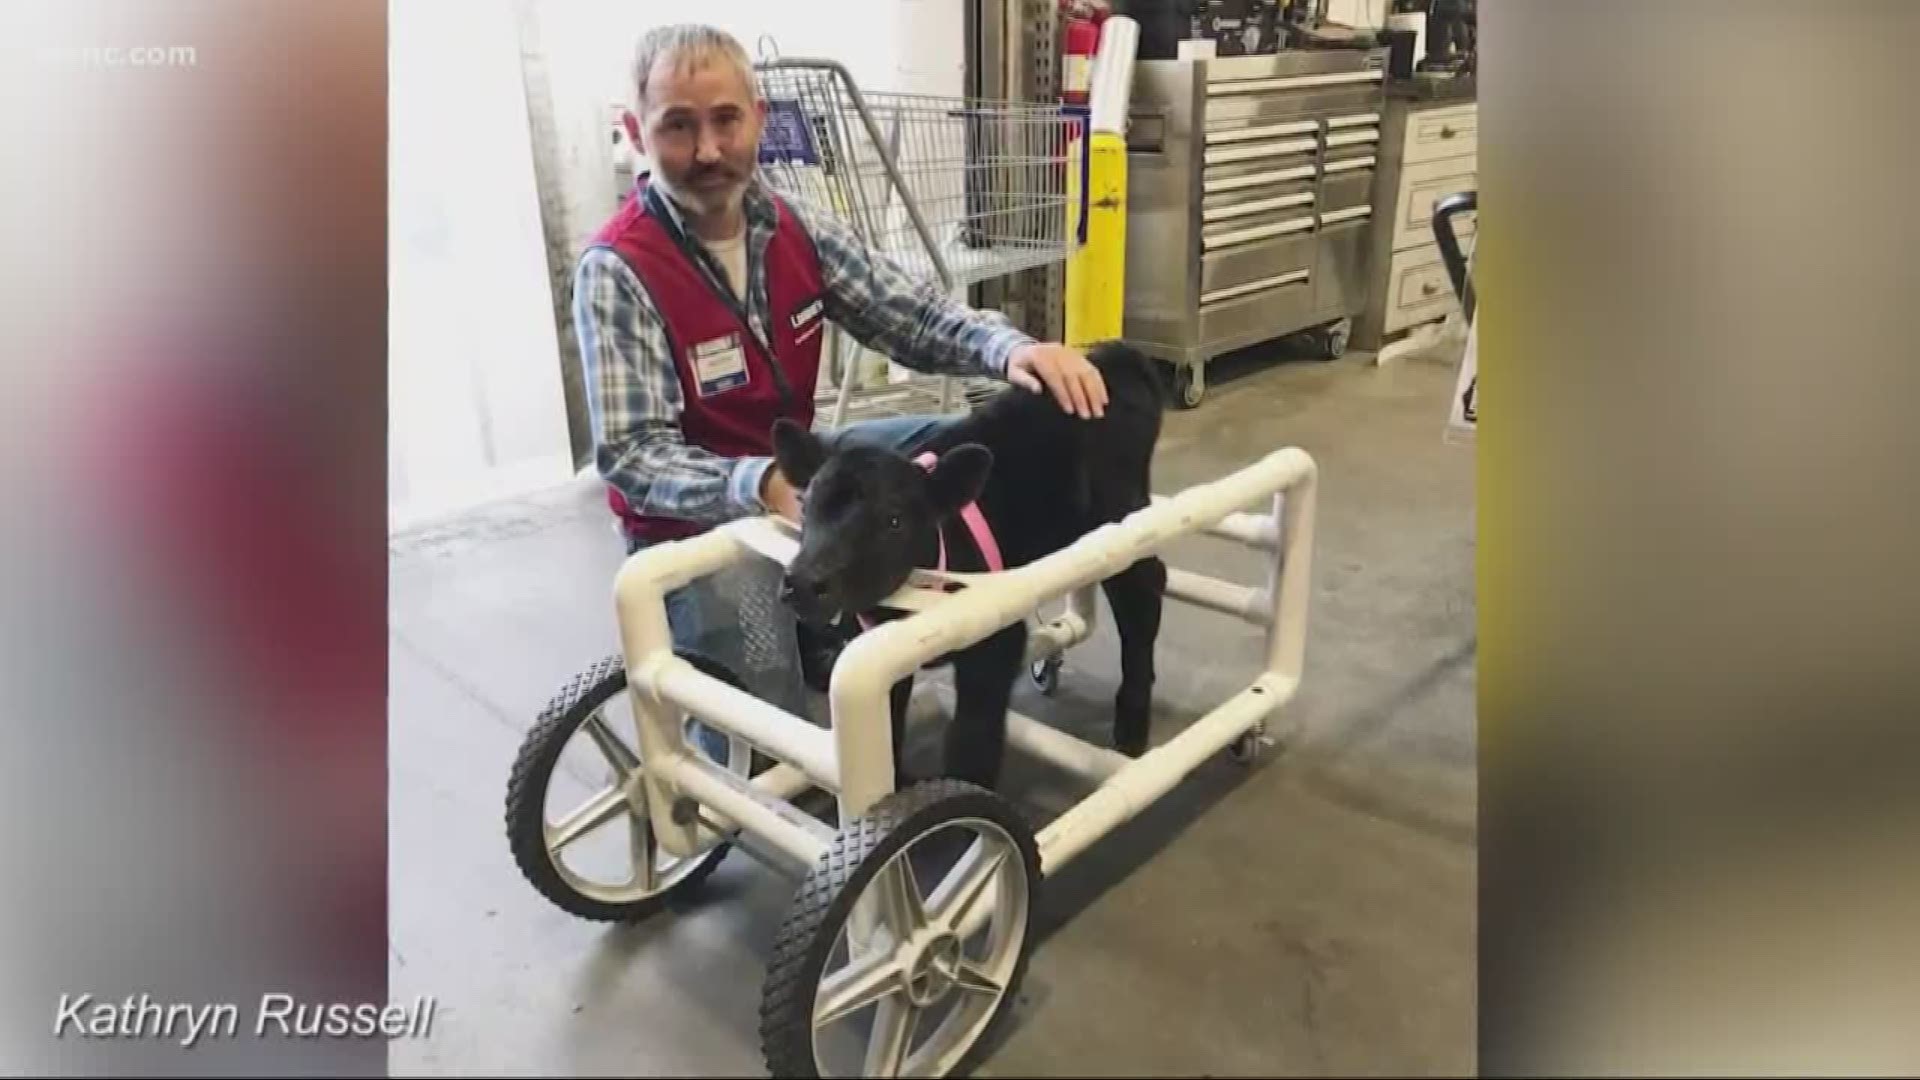 Lowe's employee in Monroe builds custom wheelchair for injured calf